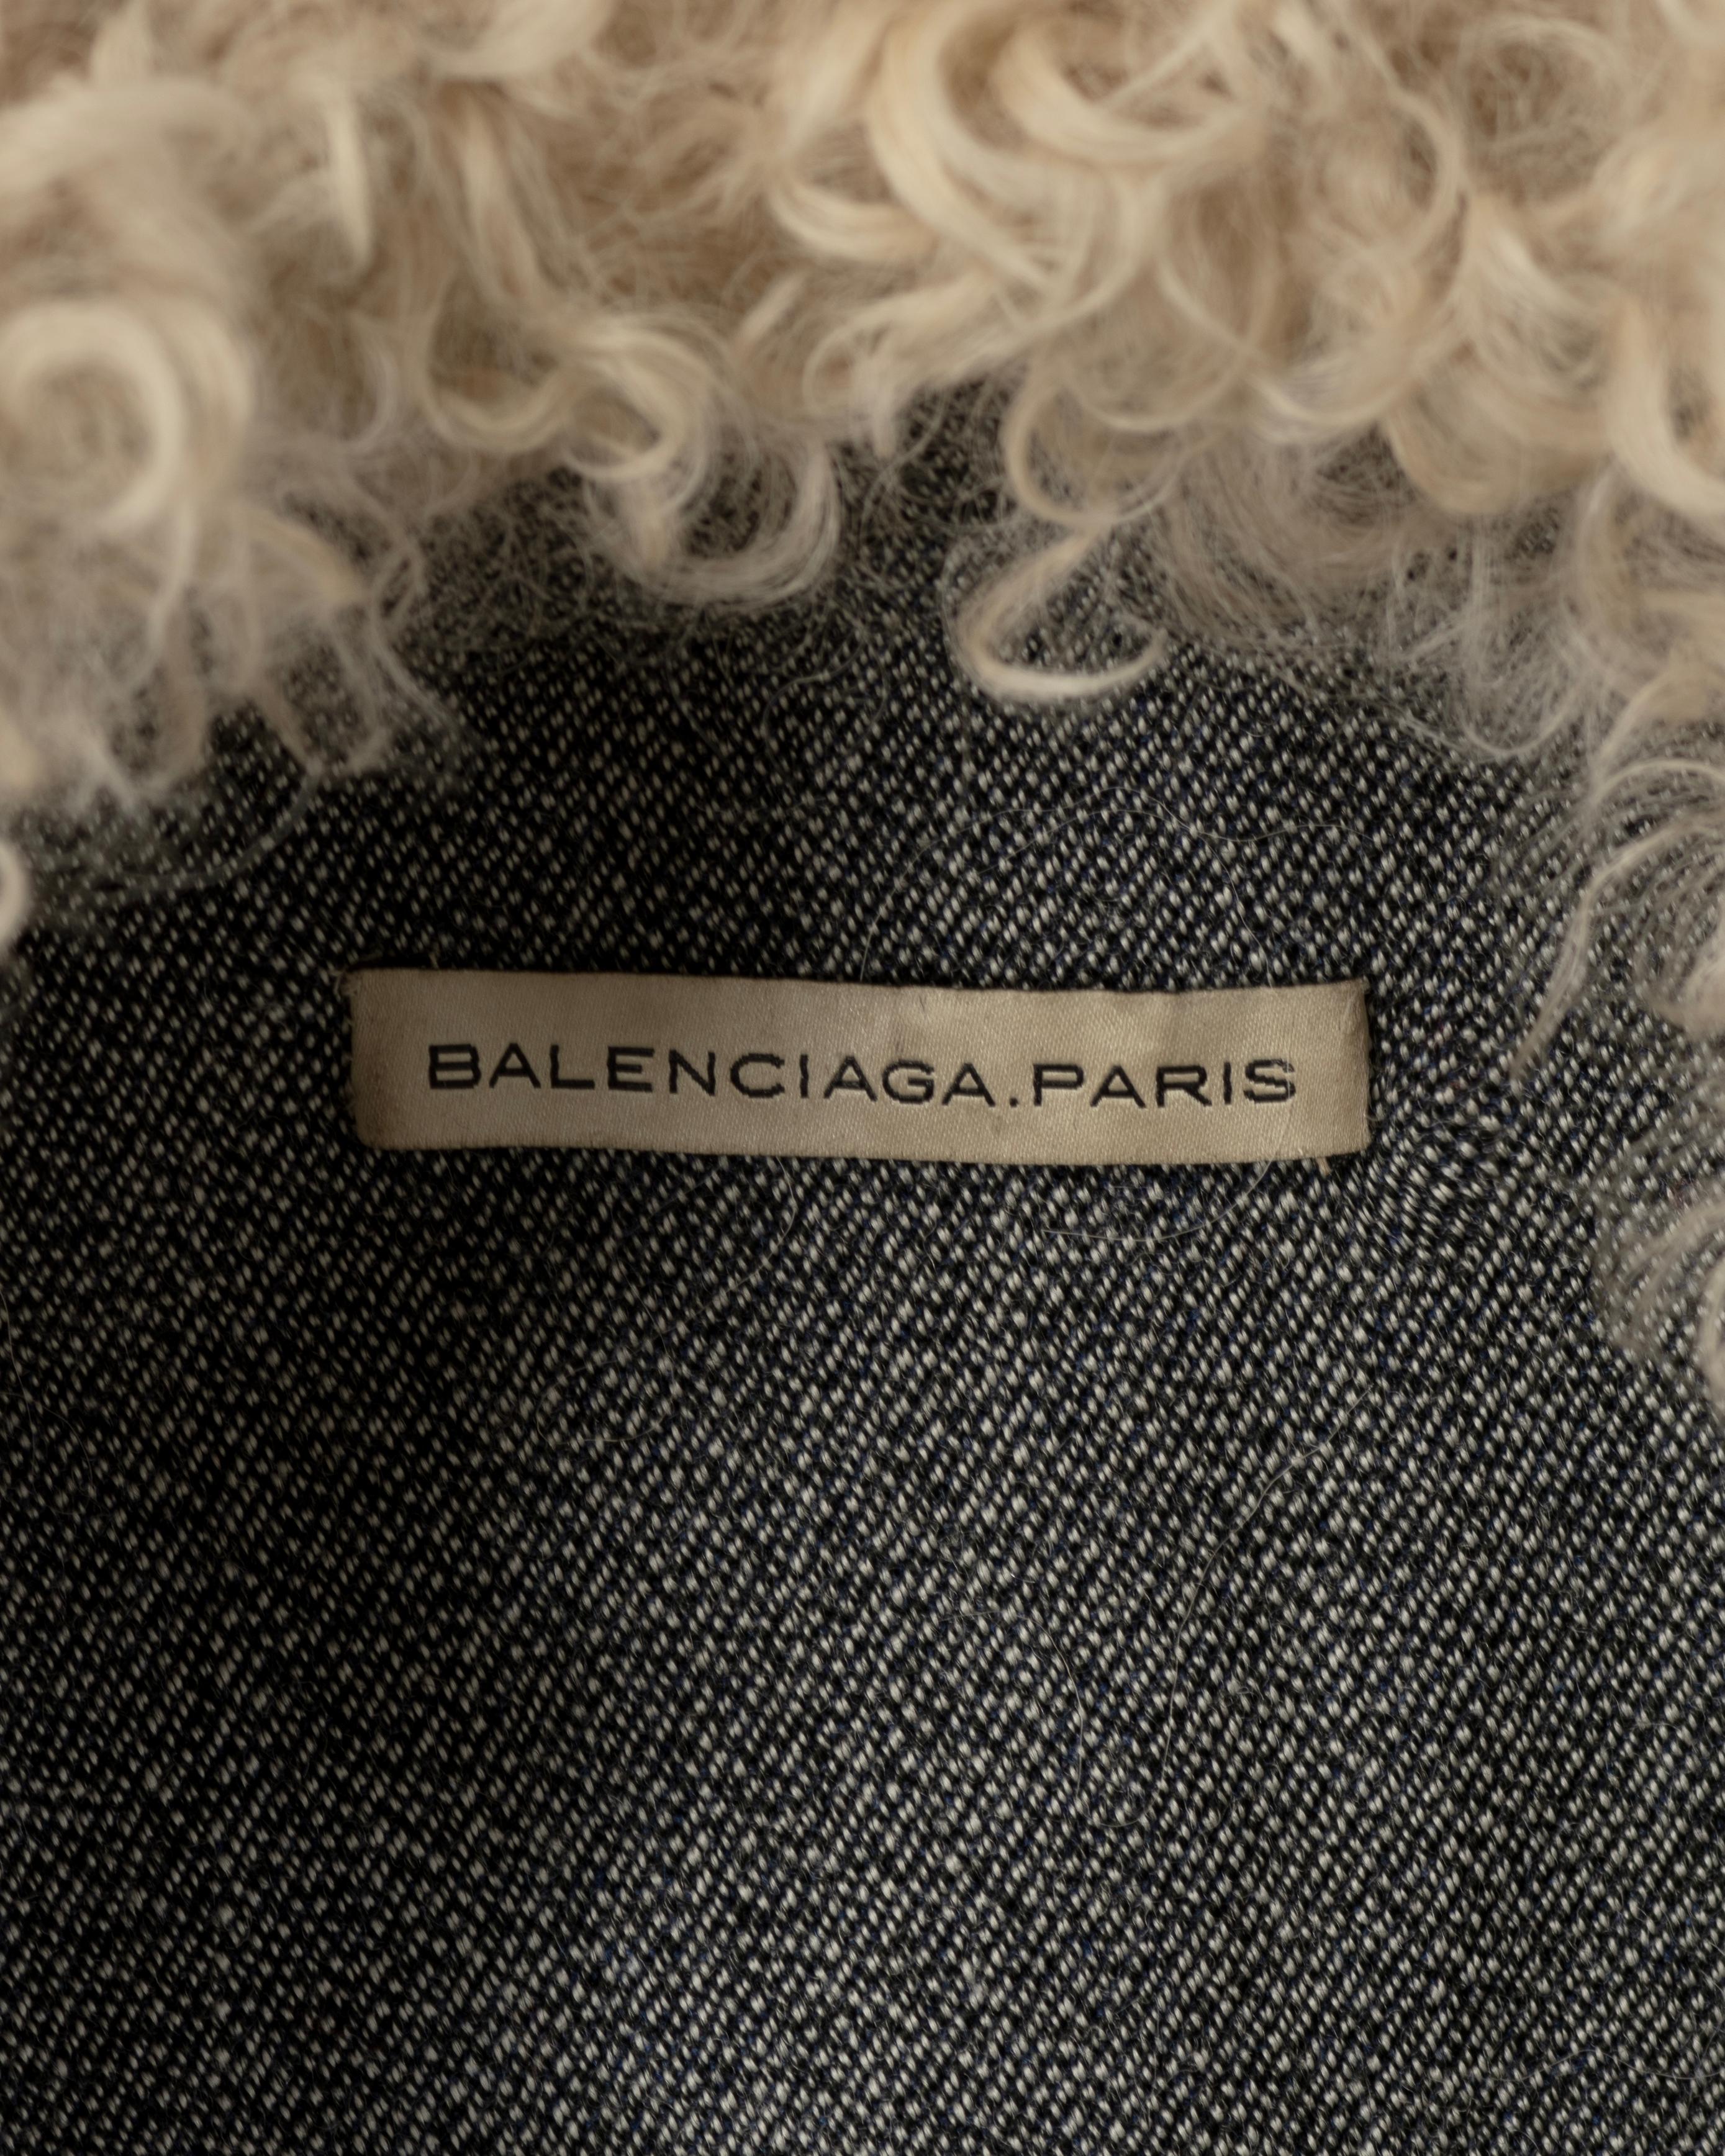 Balenciaga by Nicolas Ghesquière Cavalry Twill and Lamb Fur Jacket, fw 2004 12